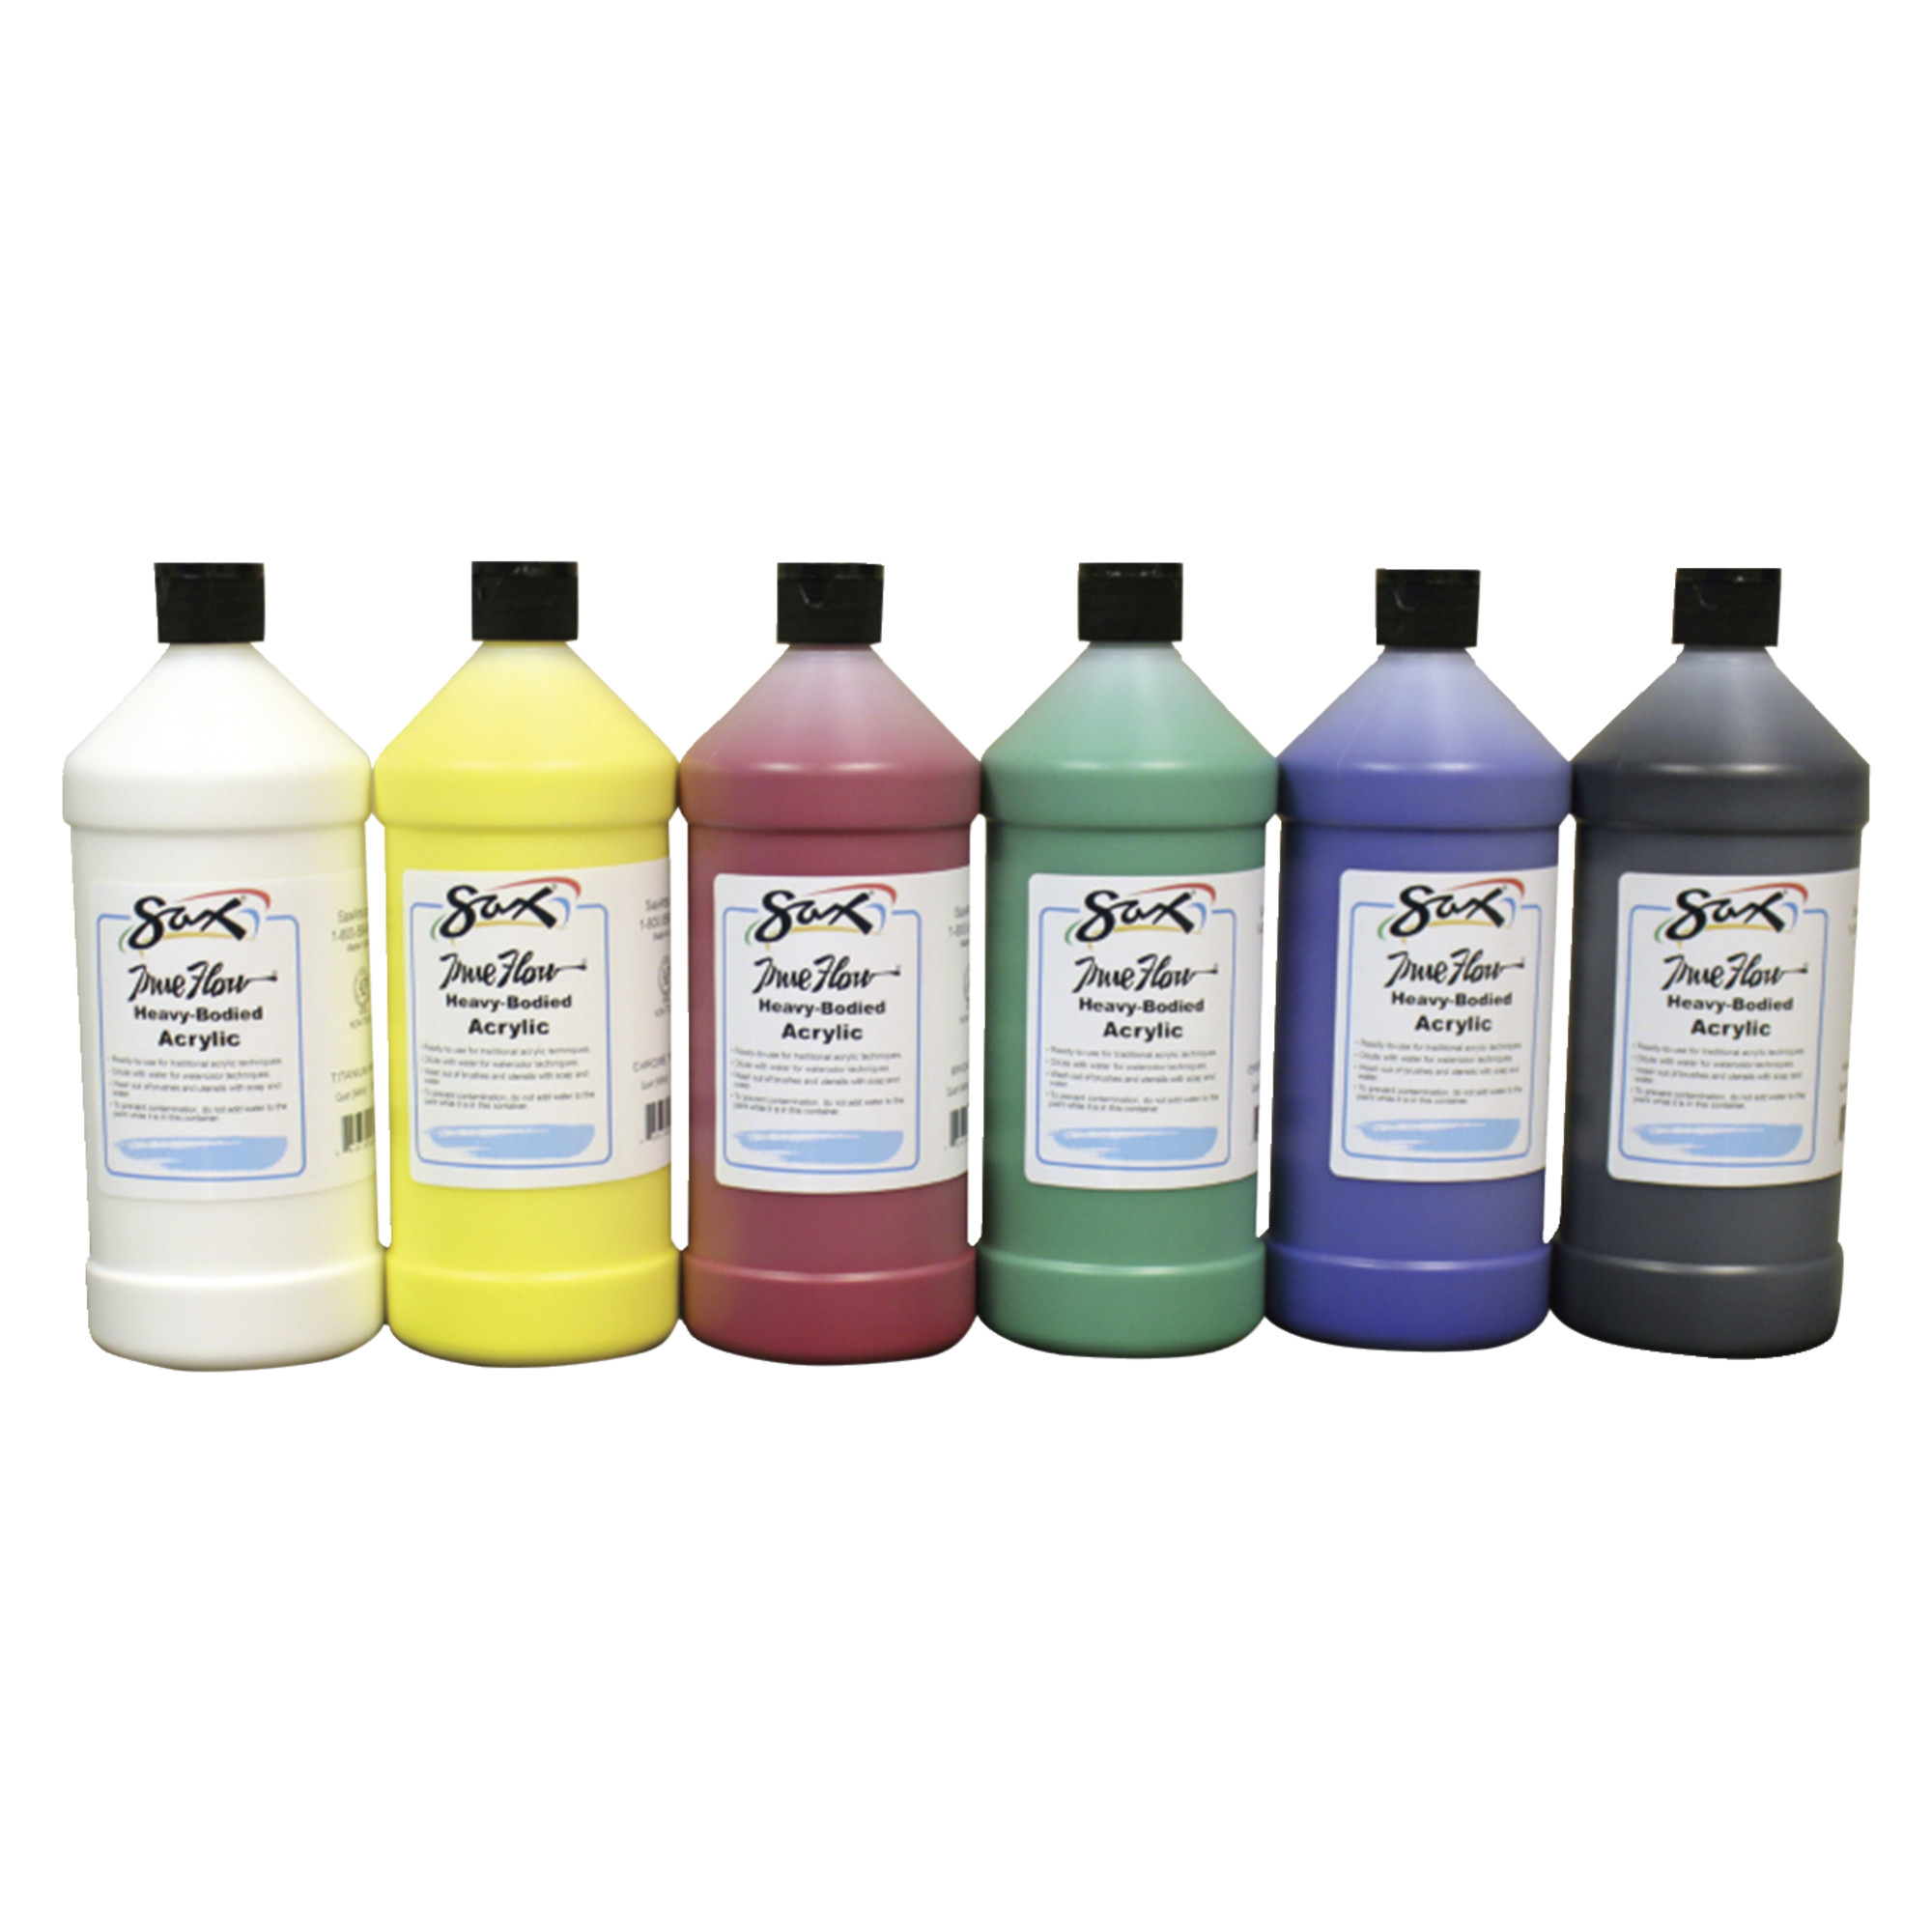 Sax True Flow Heavy Body Acrylic Paint, Assorted Colors, Quarts, Set of 6